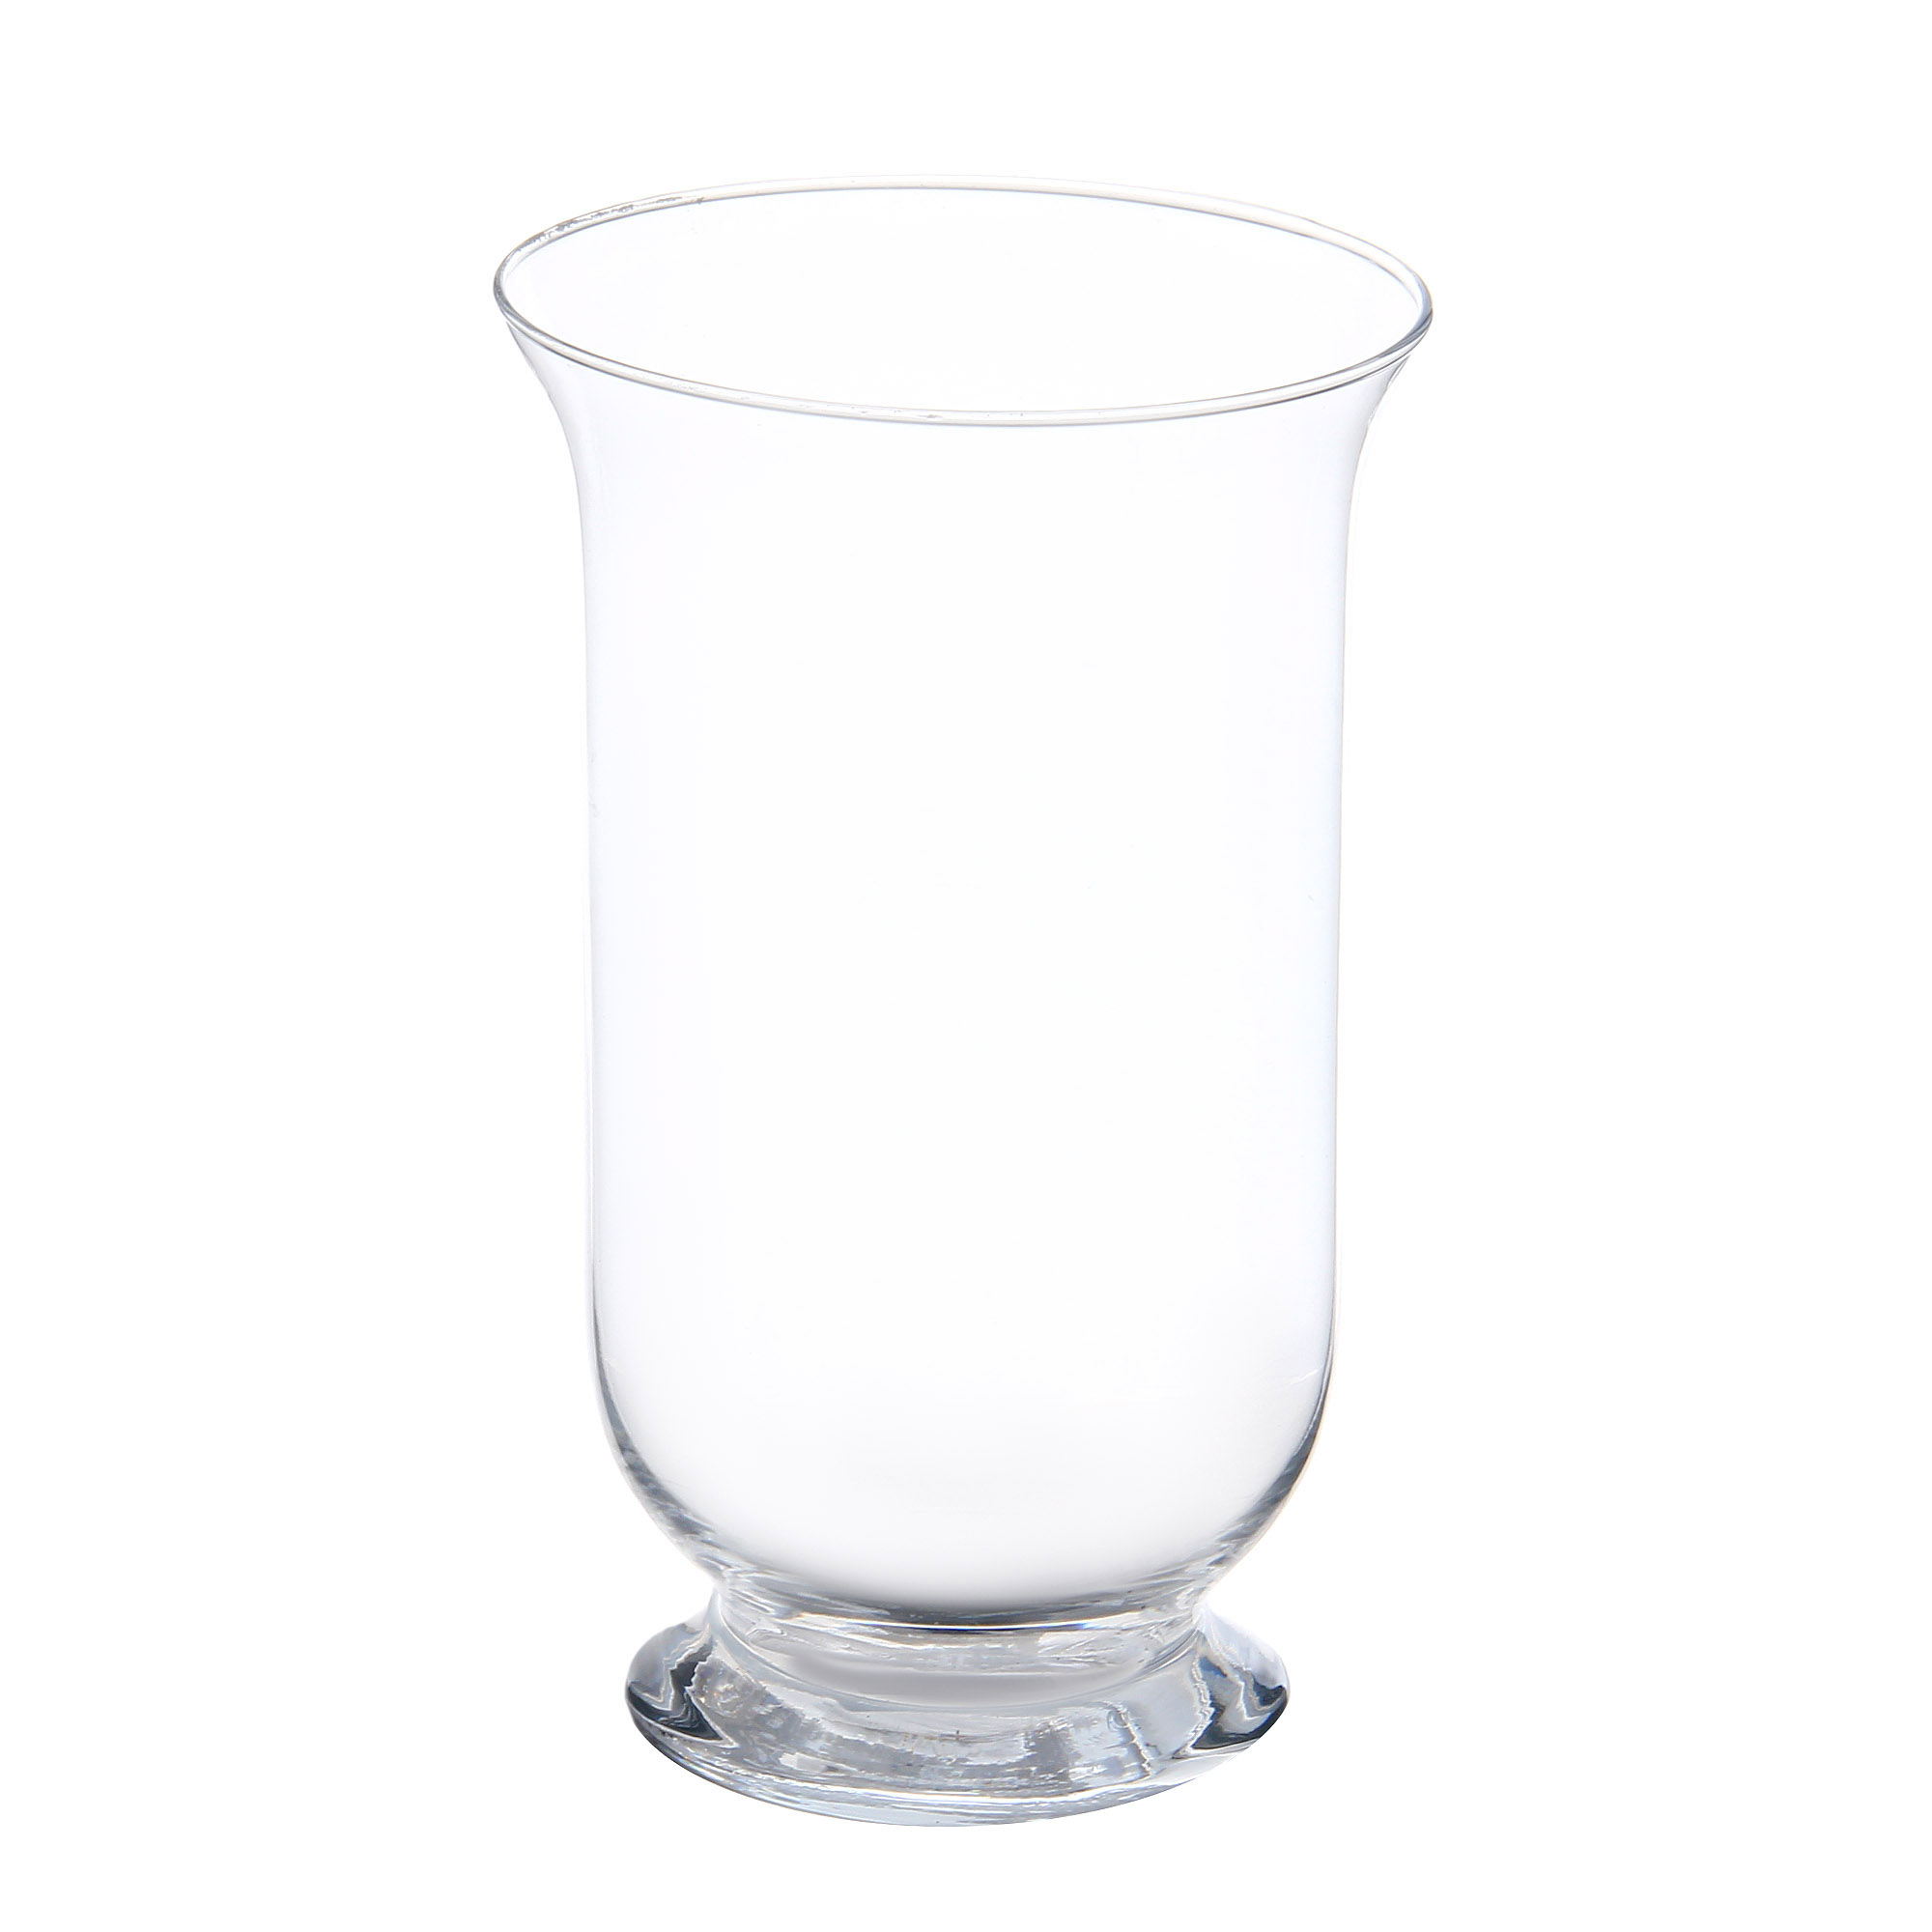 Ваза Hakbijl glass essentials hurricane 20см